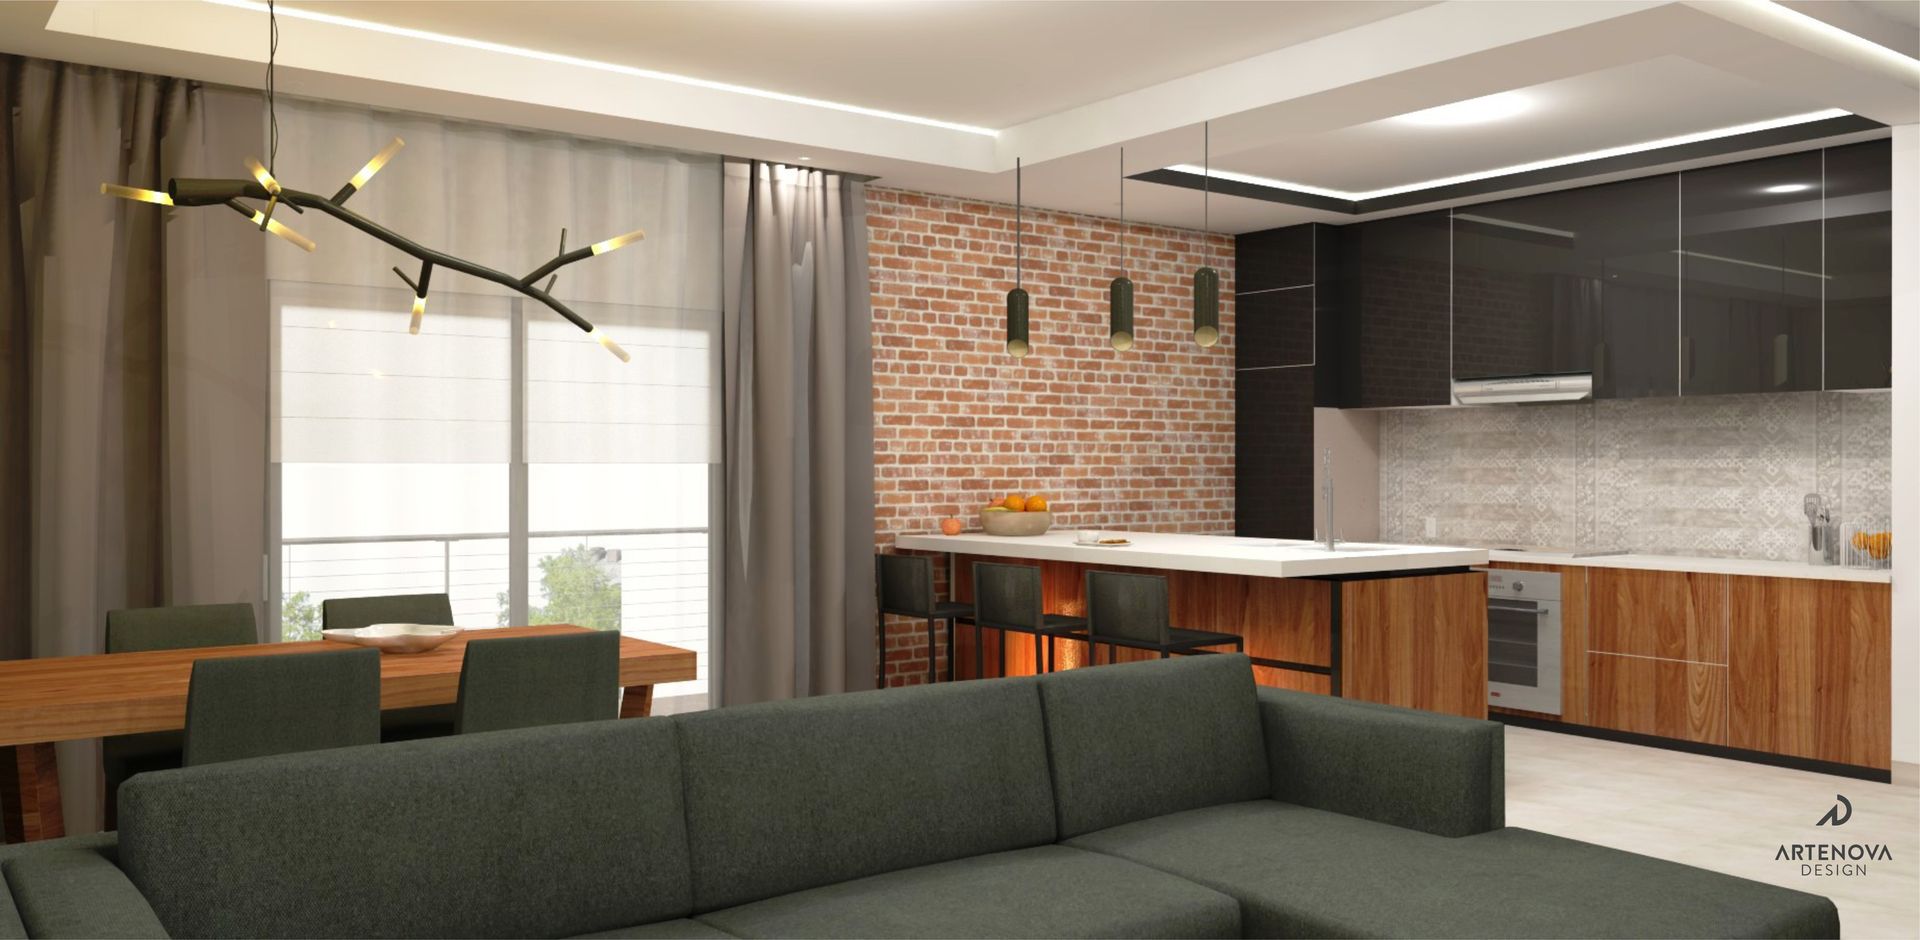 Apartament w Warszawie , Artenova Design Artenova Design Cocinas de estilo moderno